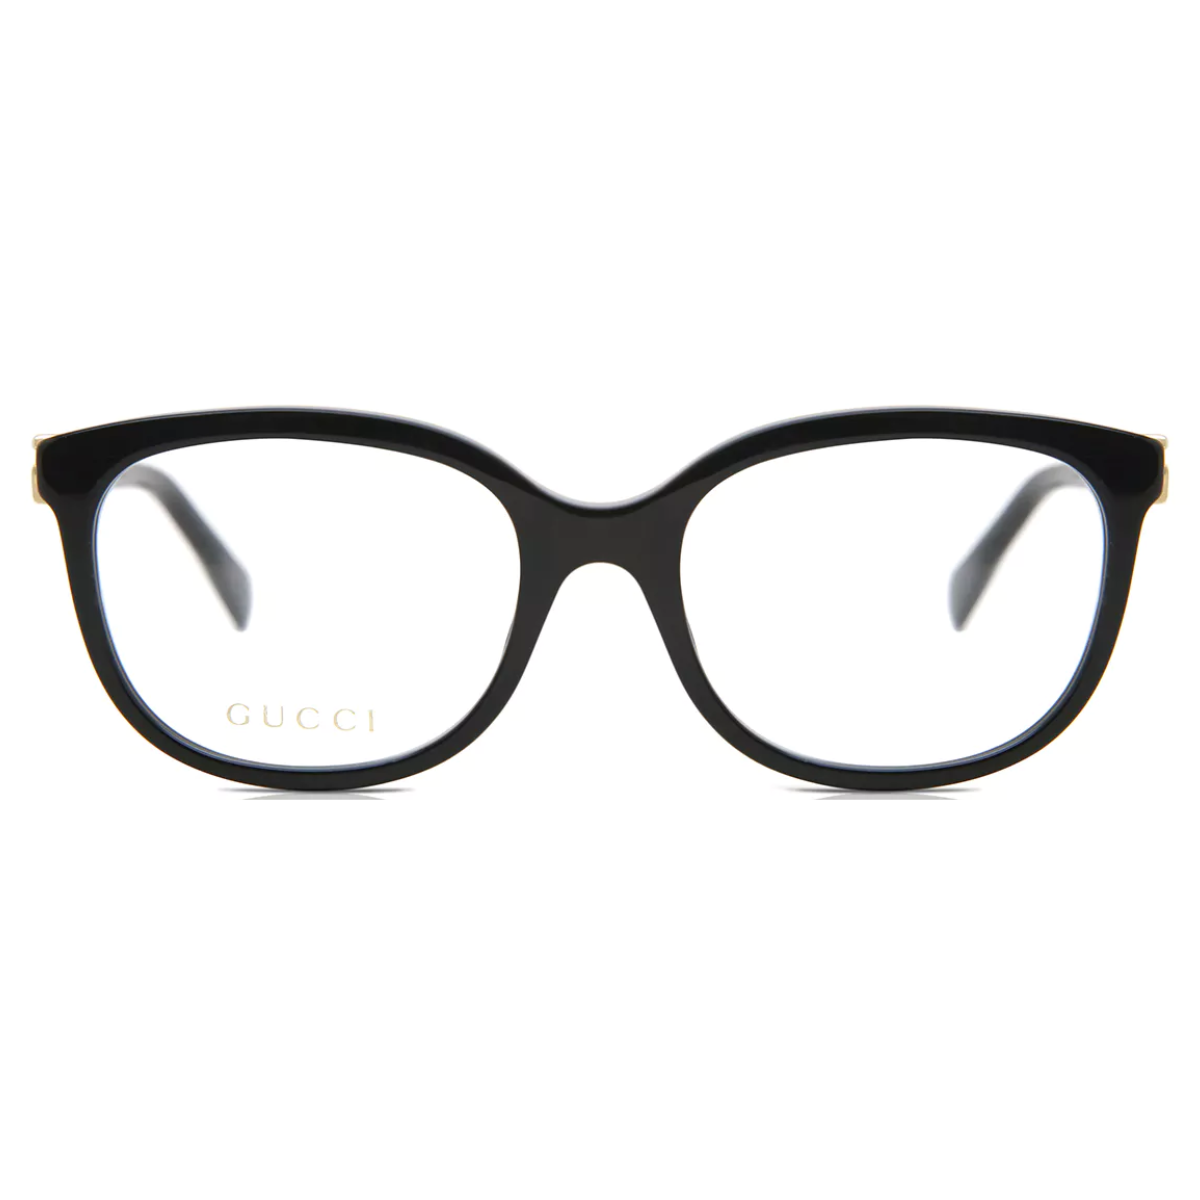 "Gucci 1075O Frames: Elevate Your Look with Premium Eyewear | Optorium"